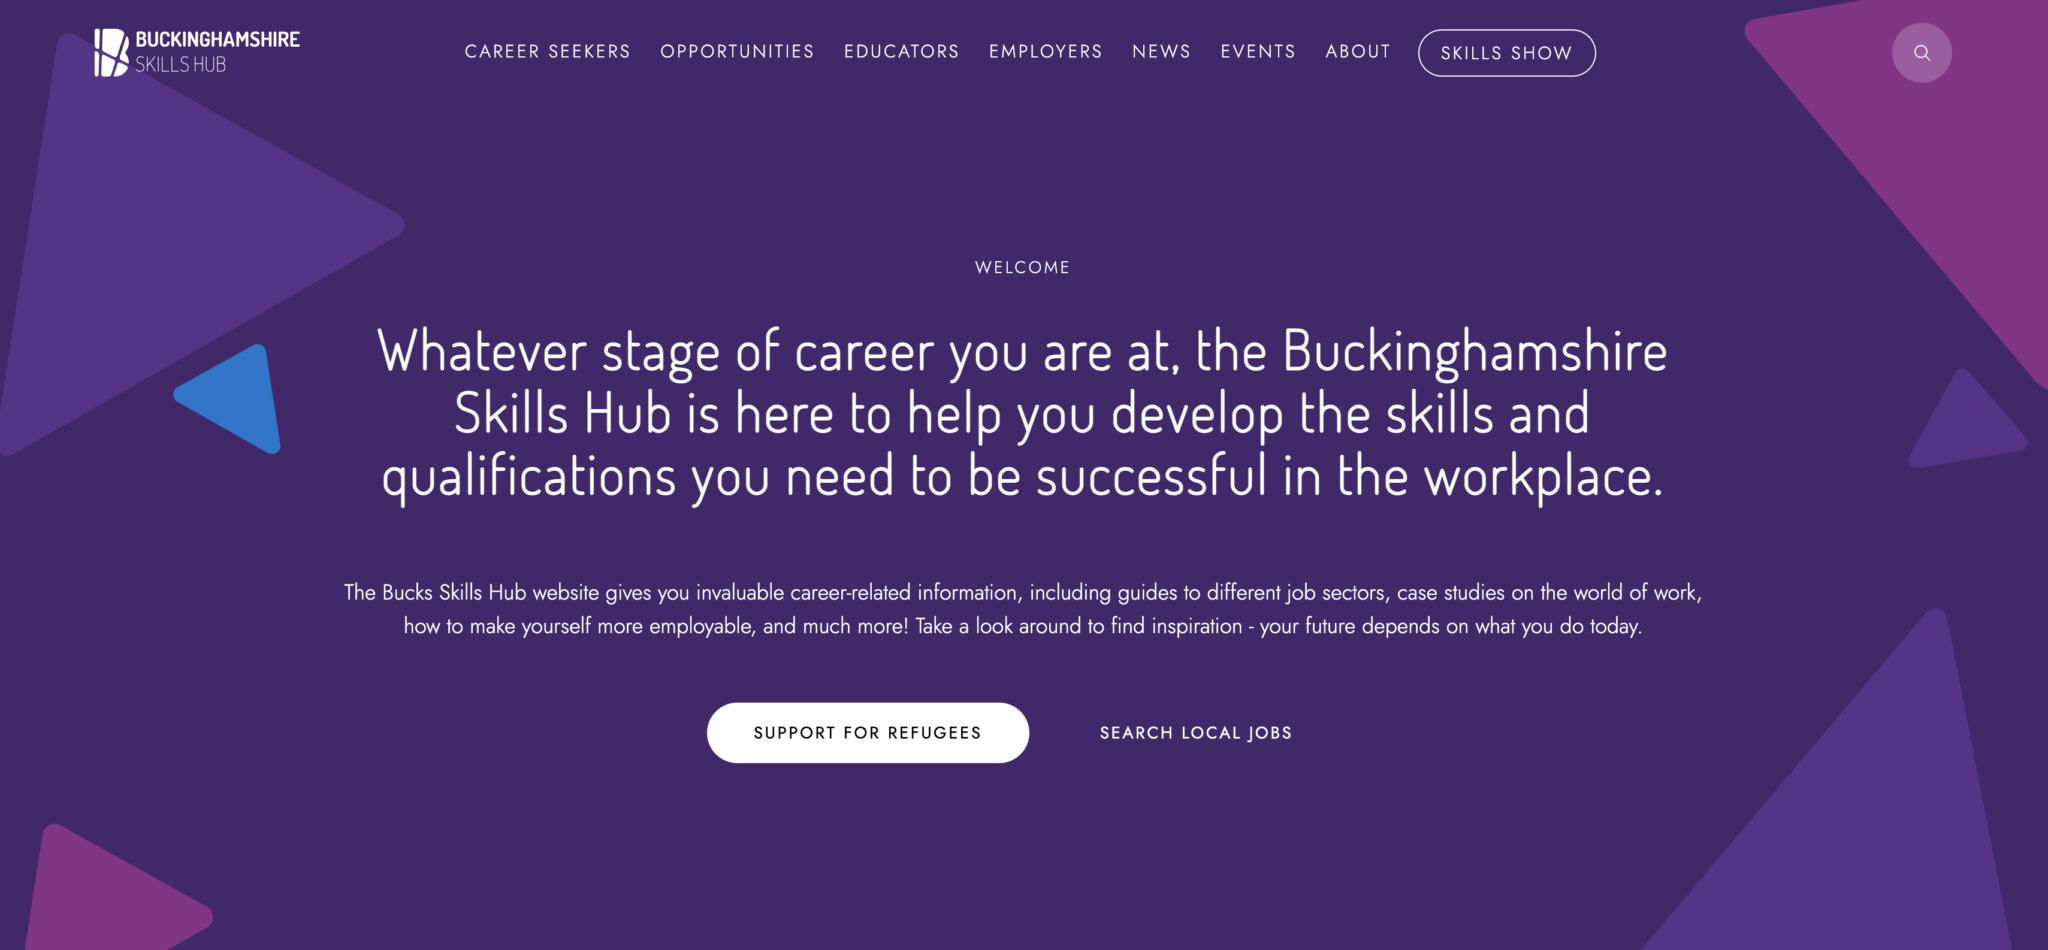 Main page of Bucks Skills HUb website.